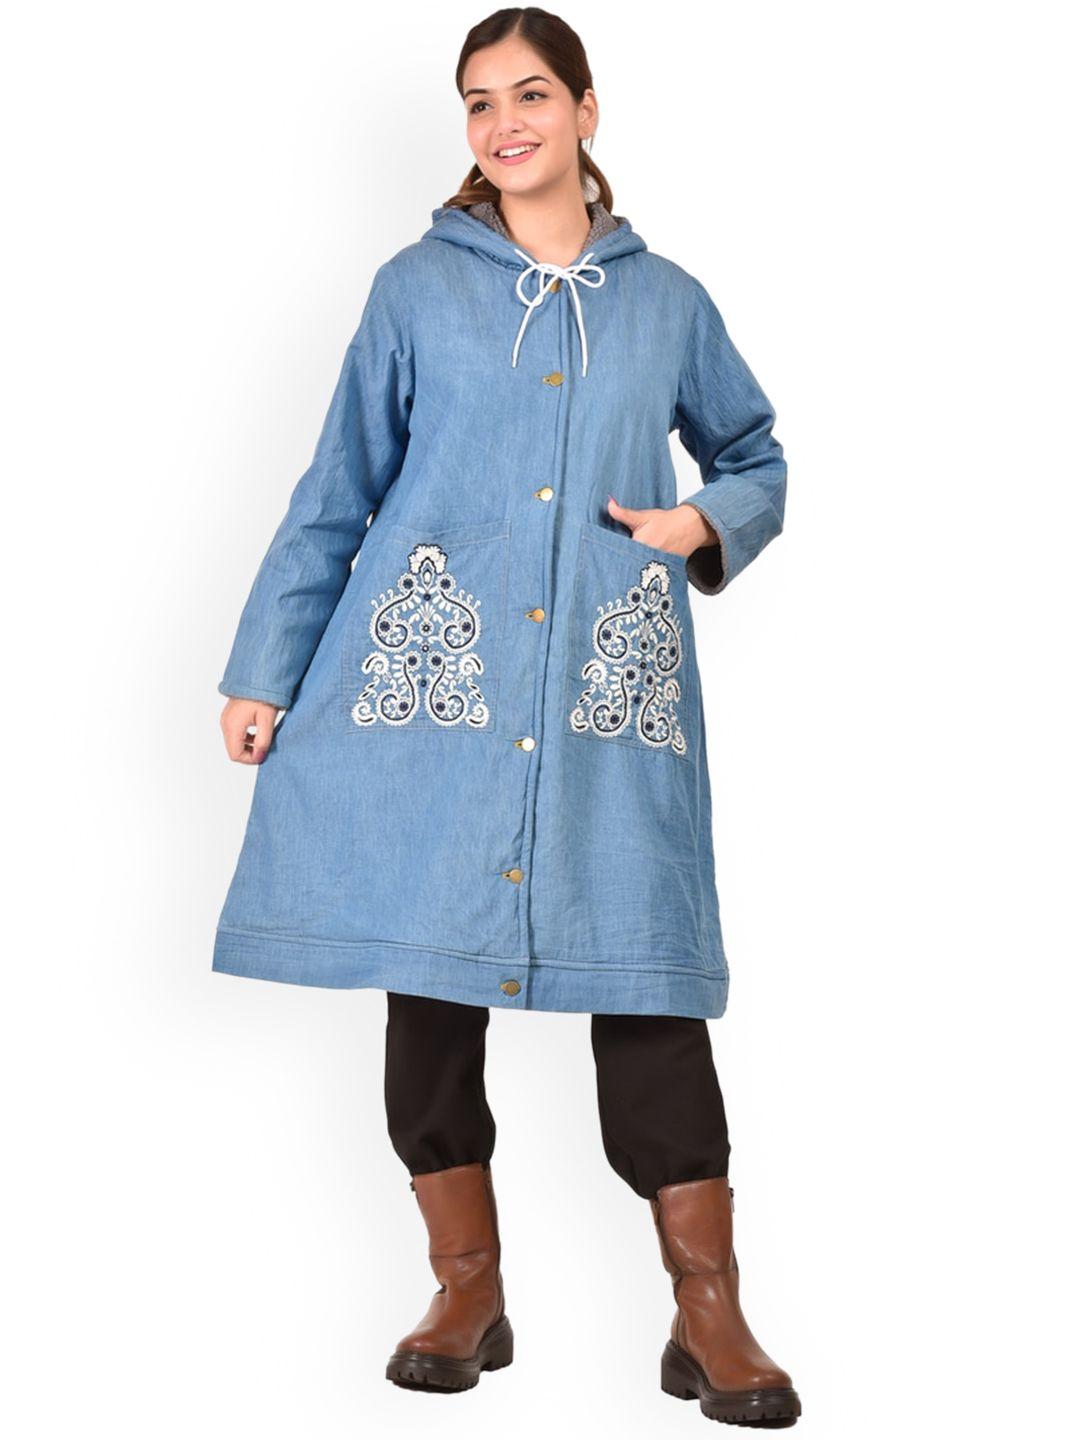 sumavi-fashion women blue white floral embroidered cotton longline open front jacket